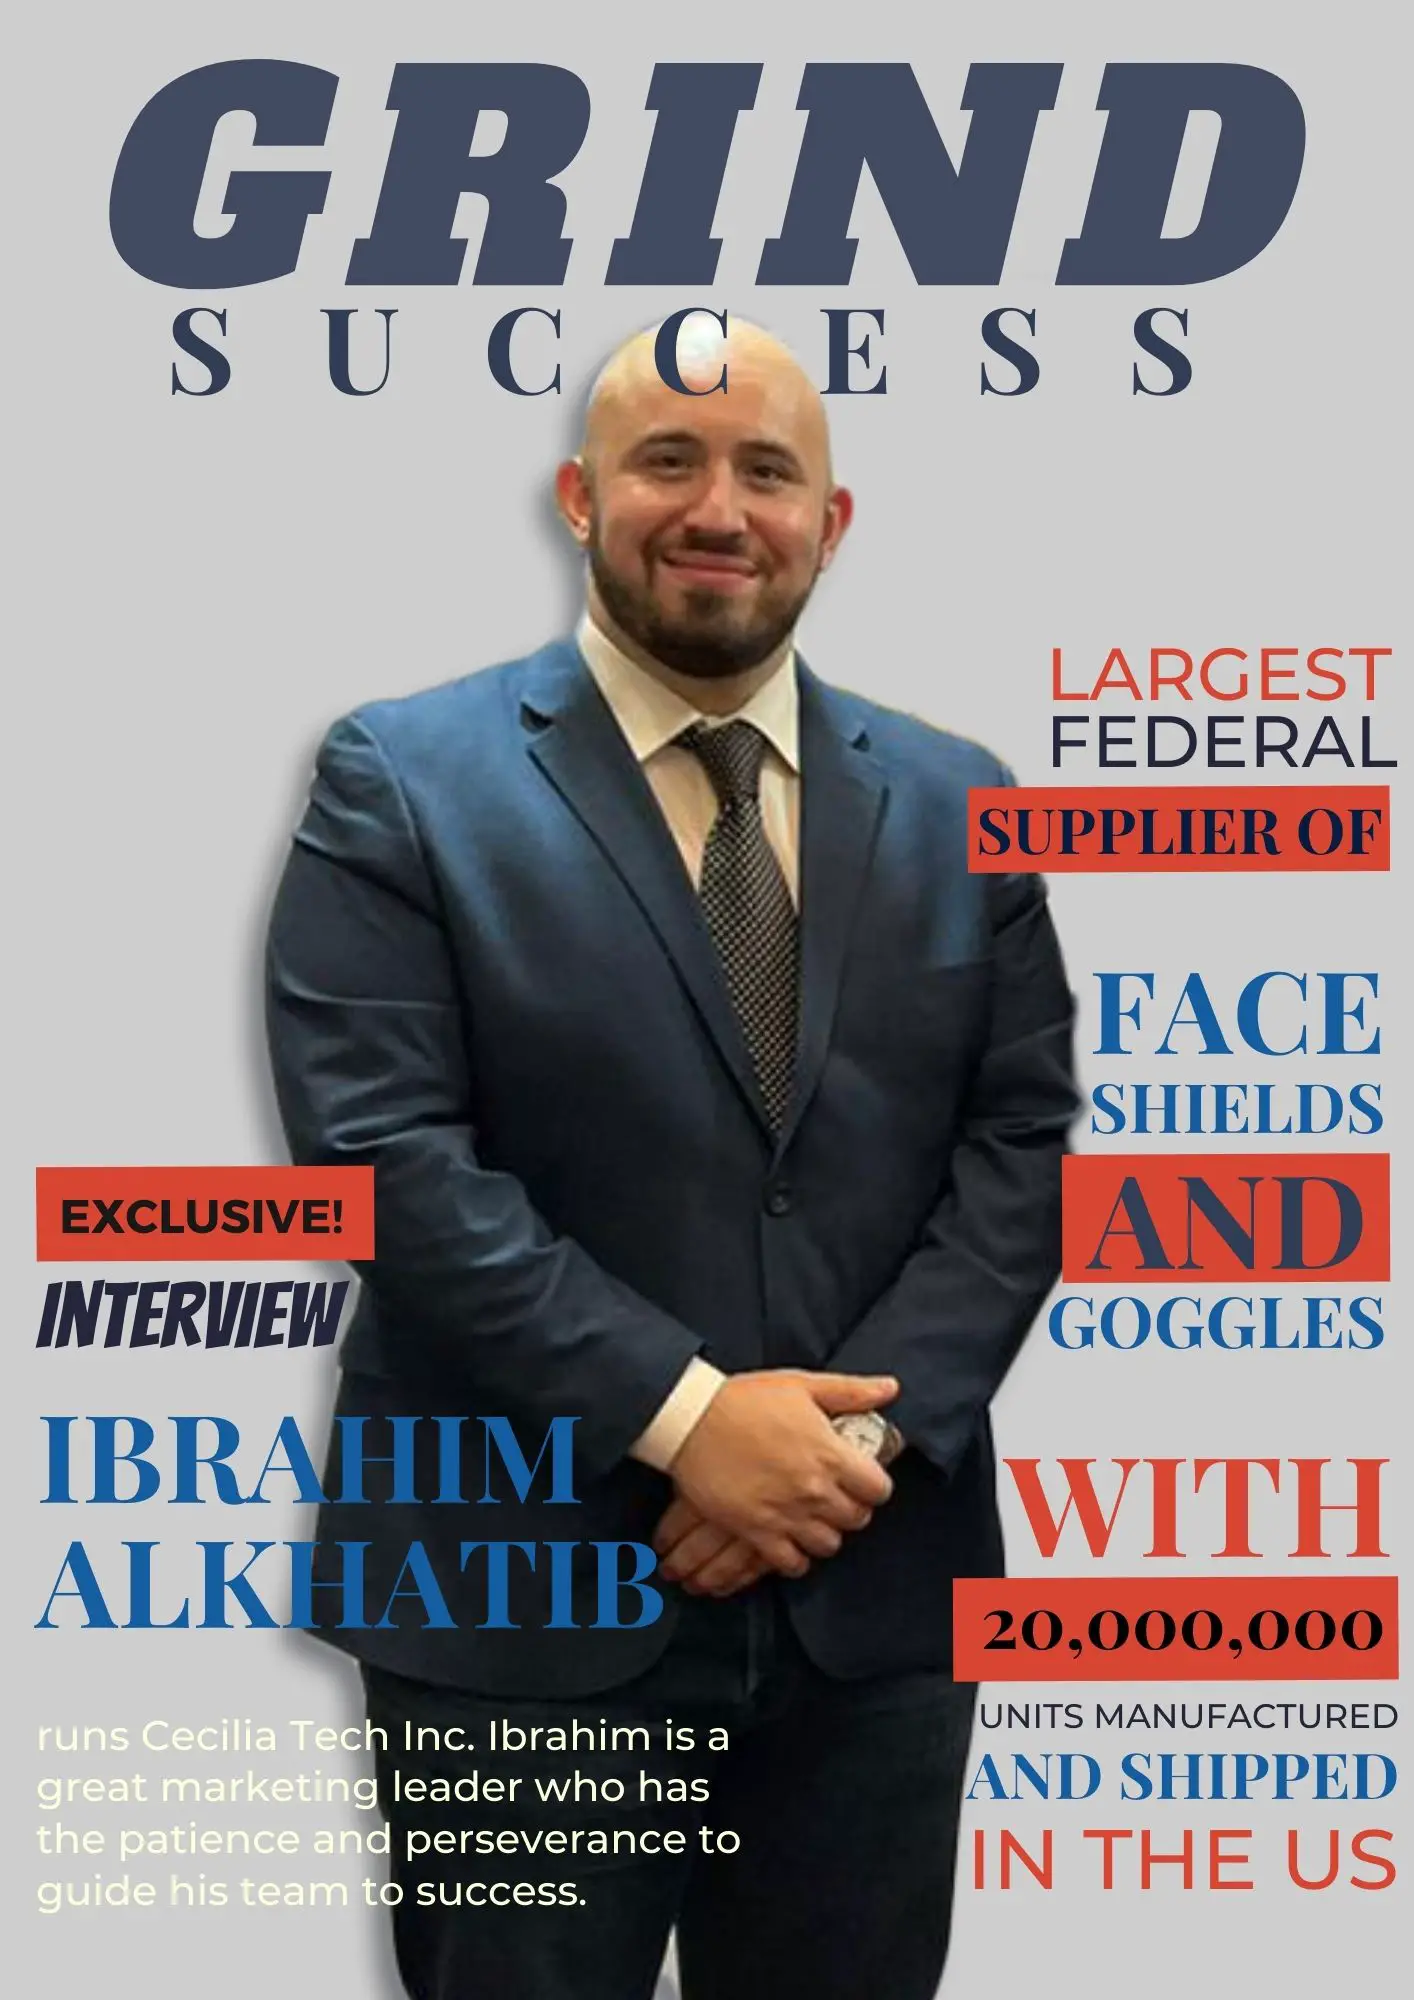 Ibrahim Alkhatib, Cecilia Tech Inc